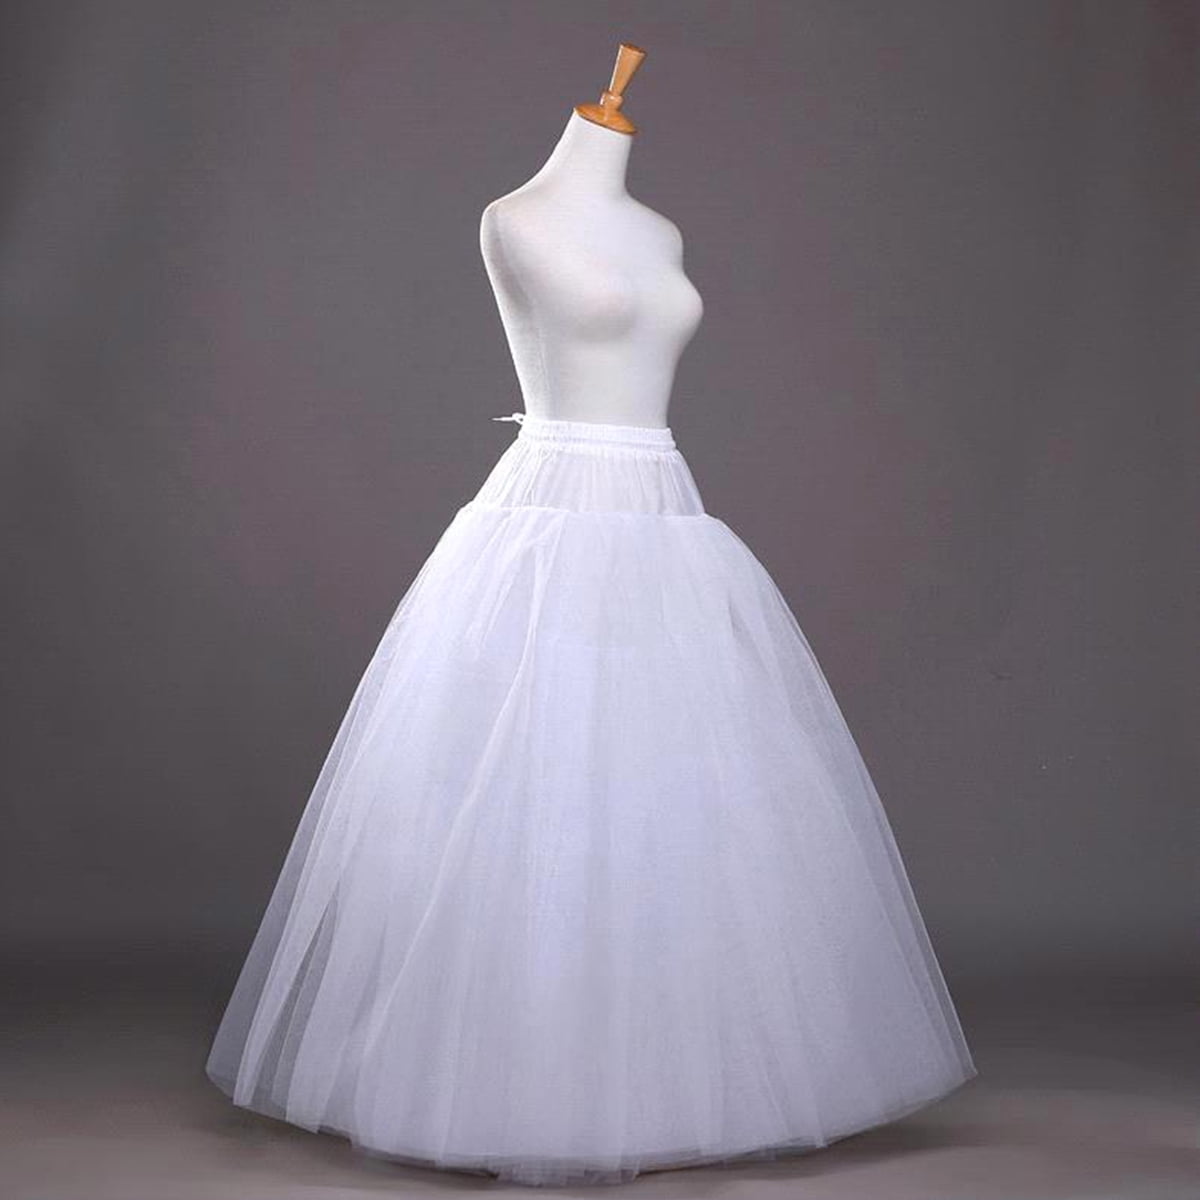 1 Hoop A-Line White Bridal Petticoat Crinoline Long Wedding Dress Underskirt Hot 